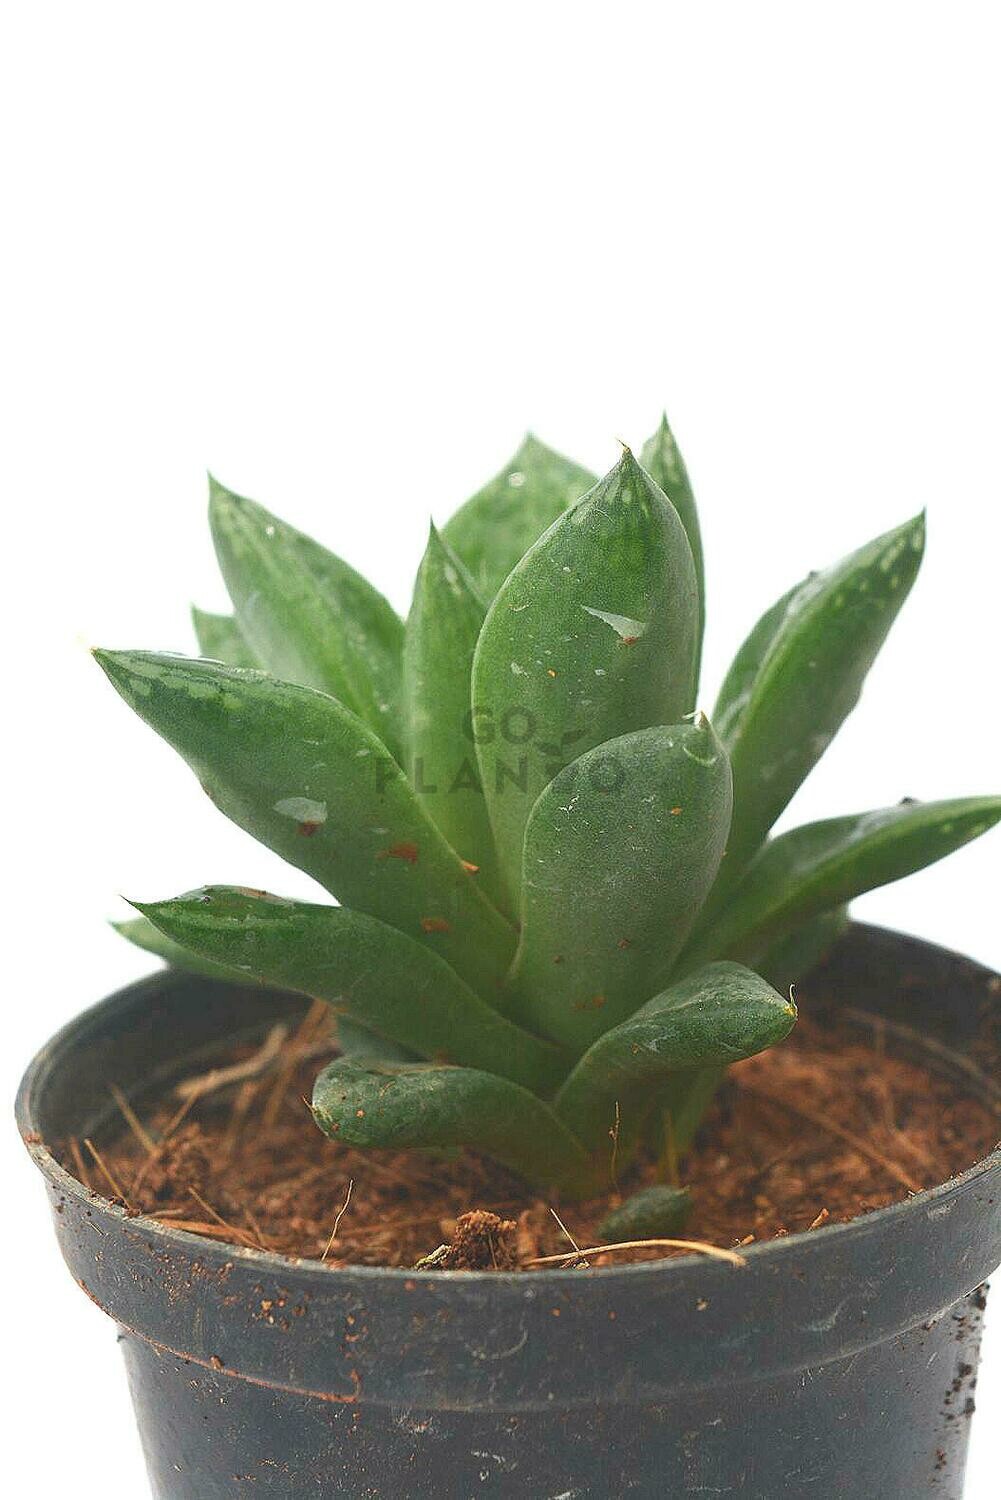 Haworthia Cymbiformis (S) in 3 inches Nursery Pot